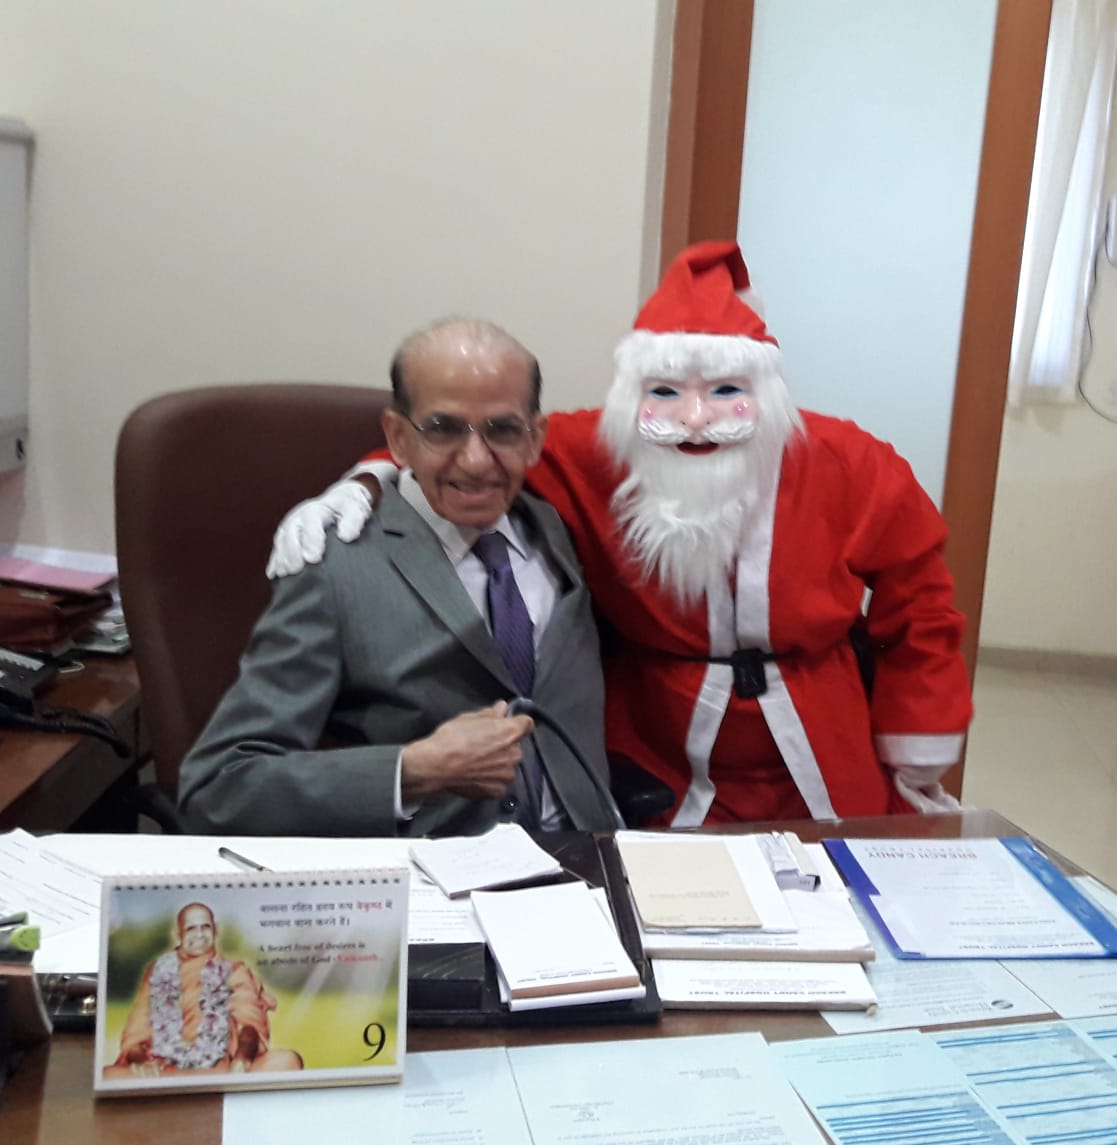 Santa with Dr. Meraney